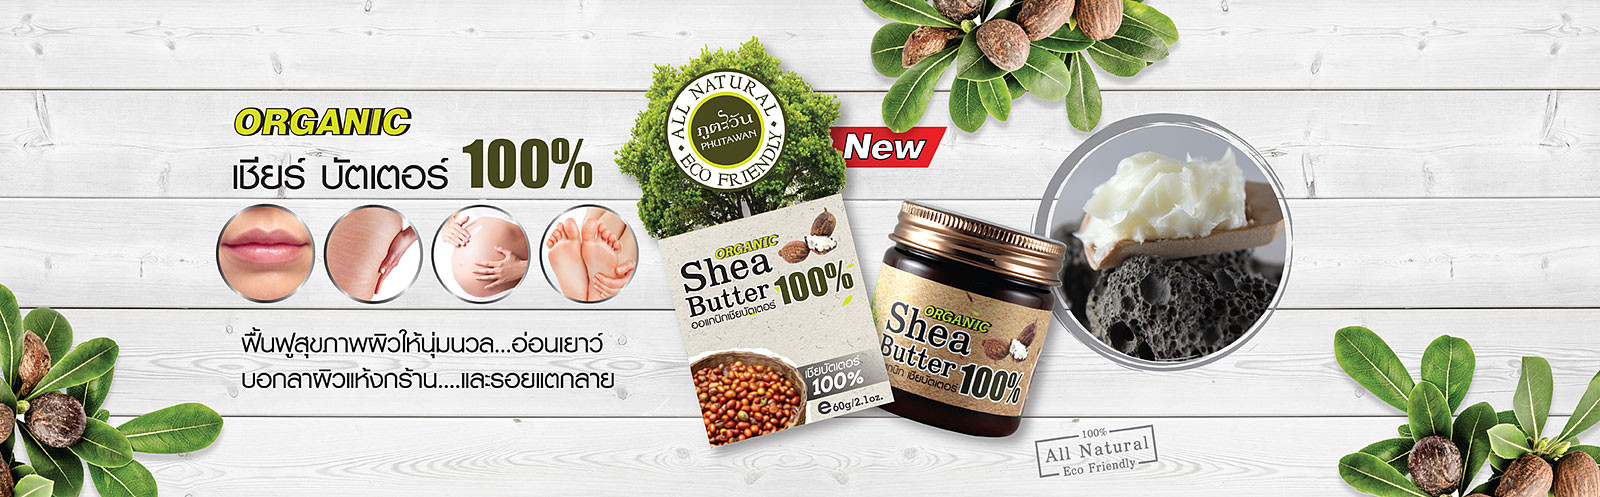 shea_butter_Тайское органическое масло ШИ (карите) 100% organic Shea Butter Phutawan